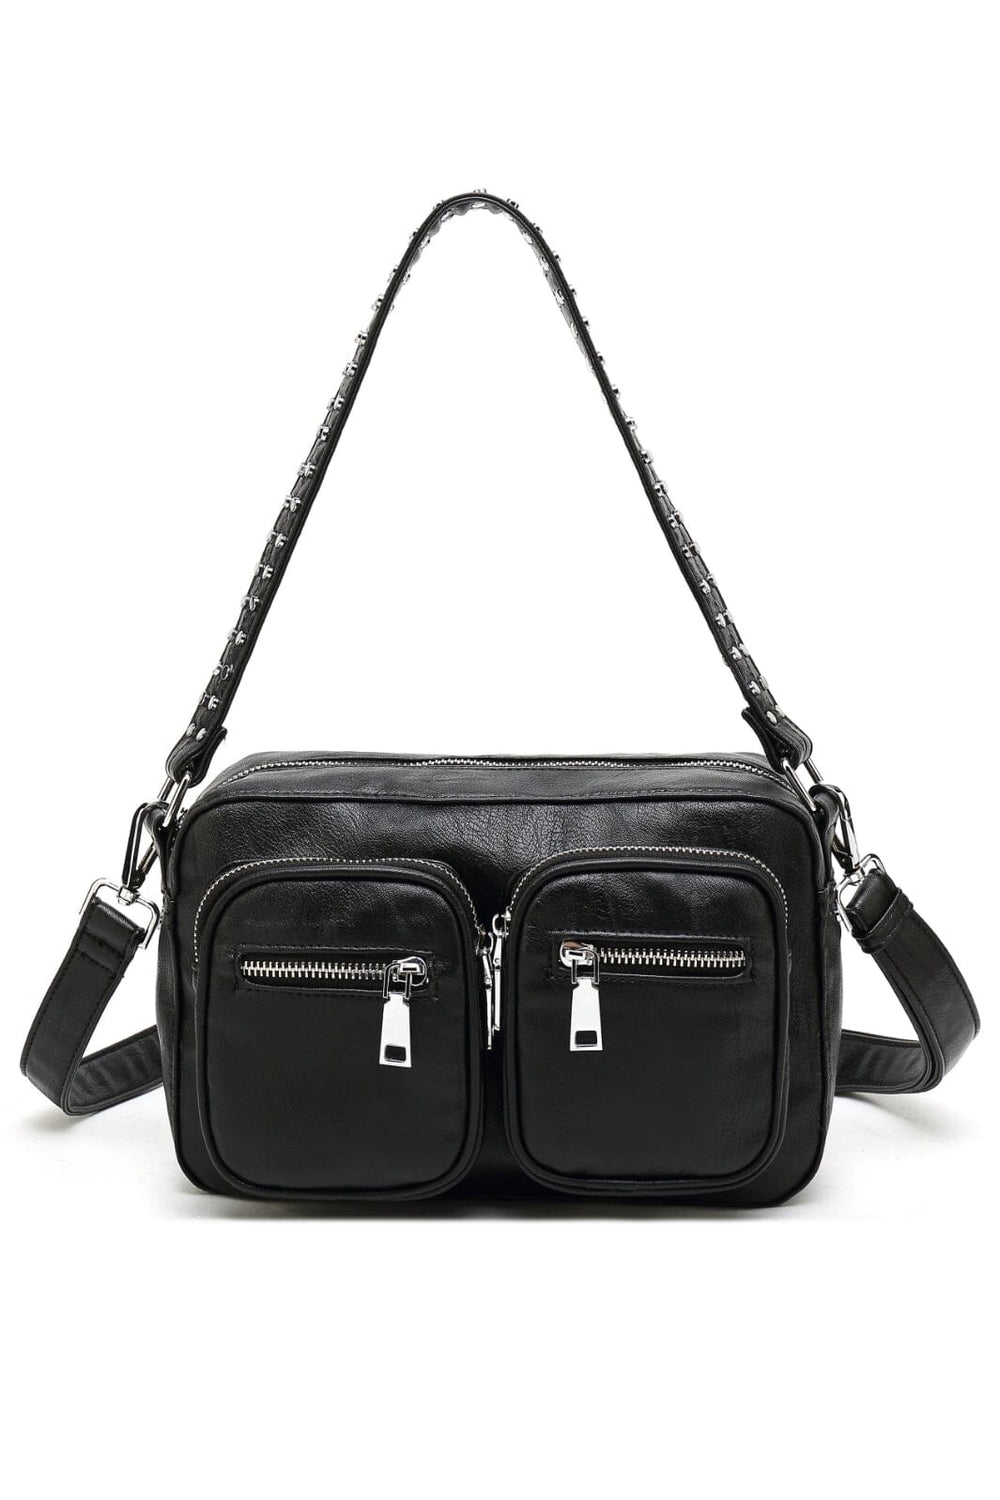 Noella - Celina Bag - 001 Black Leather Look Tasker 